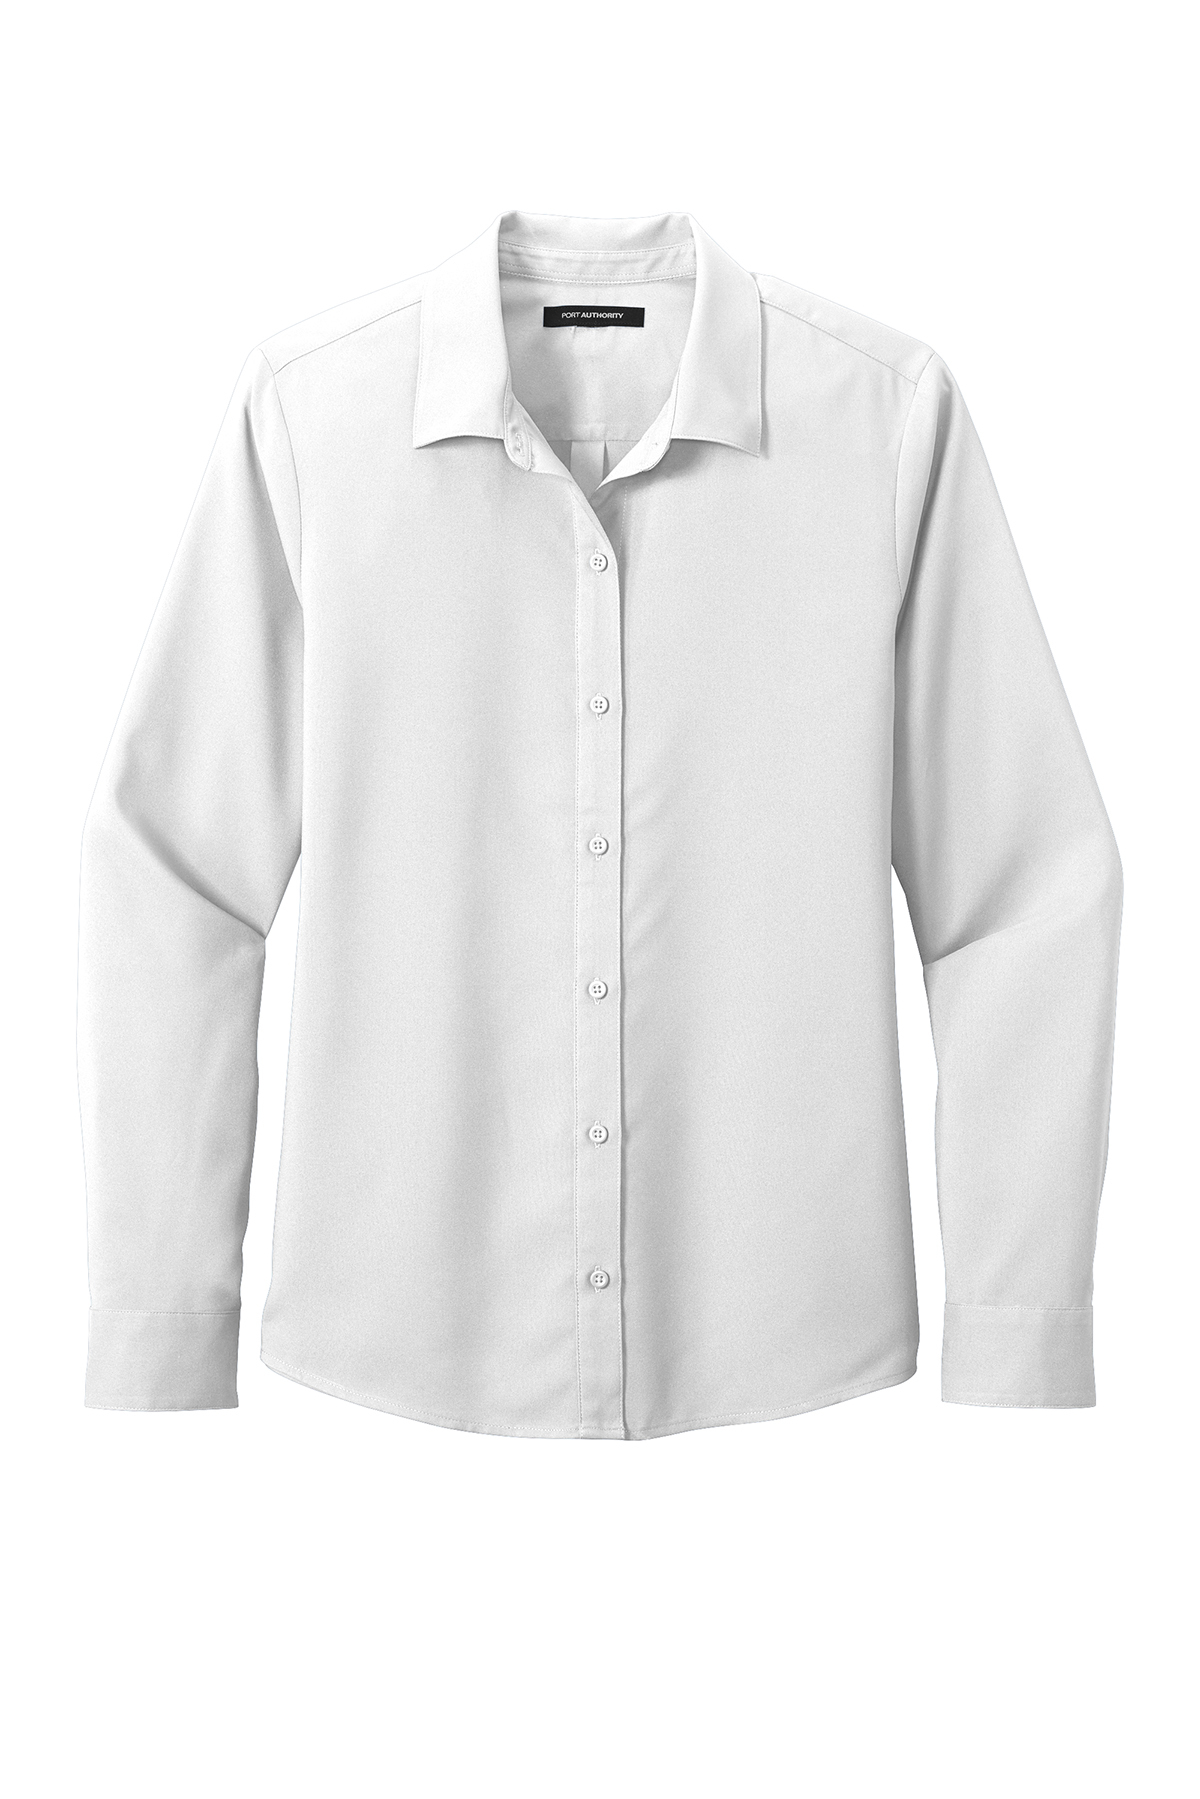 Port Authority LW401 - Ladies Long Sleeve Performance Staff Shirt